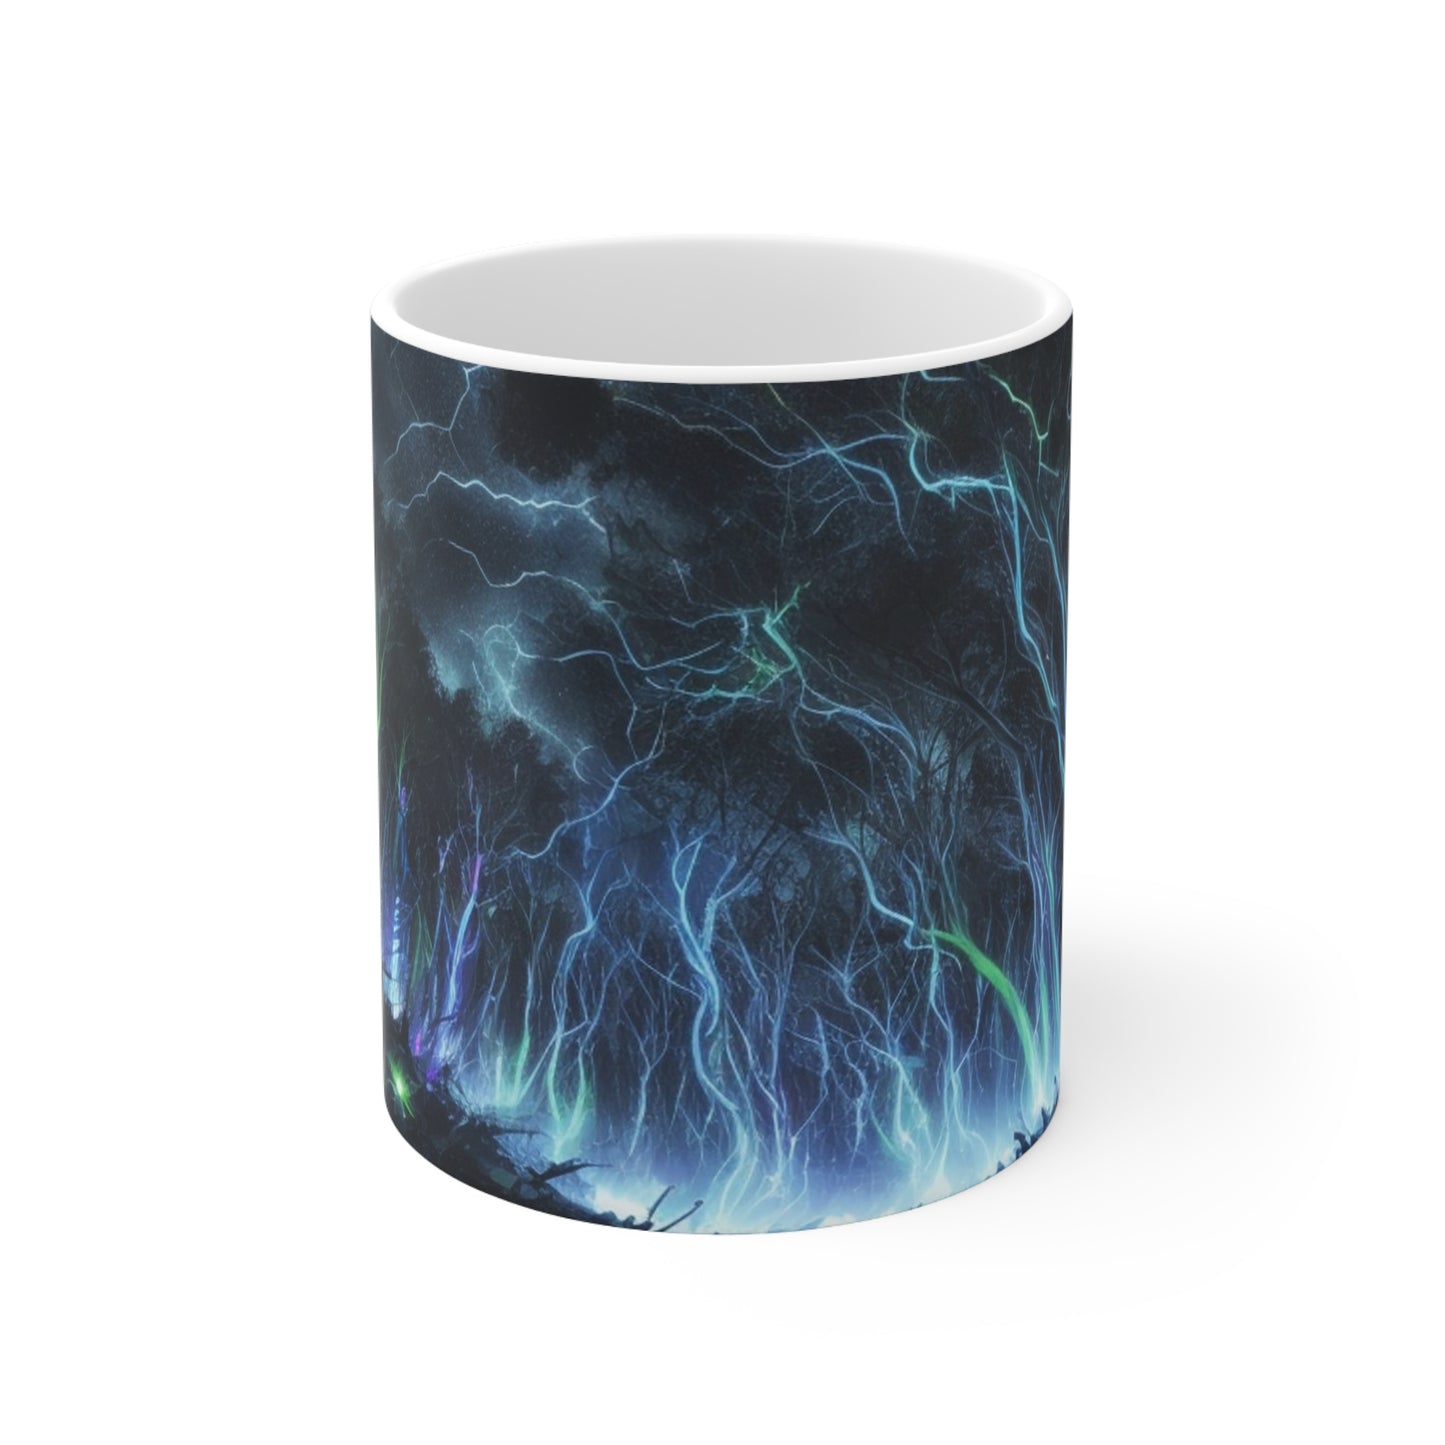 Blue And Green Lightning In Forest At Night Mug - Ceramic Coffee Mug 11oz